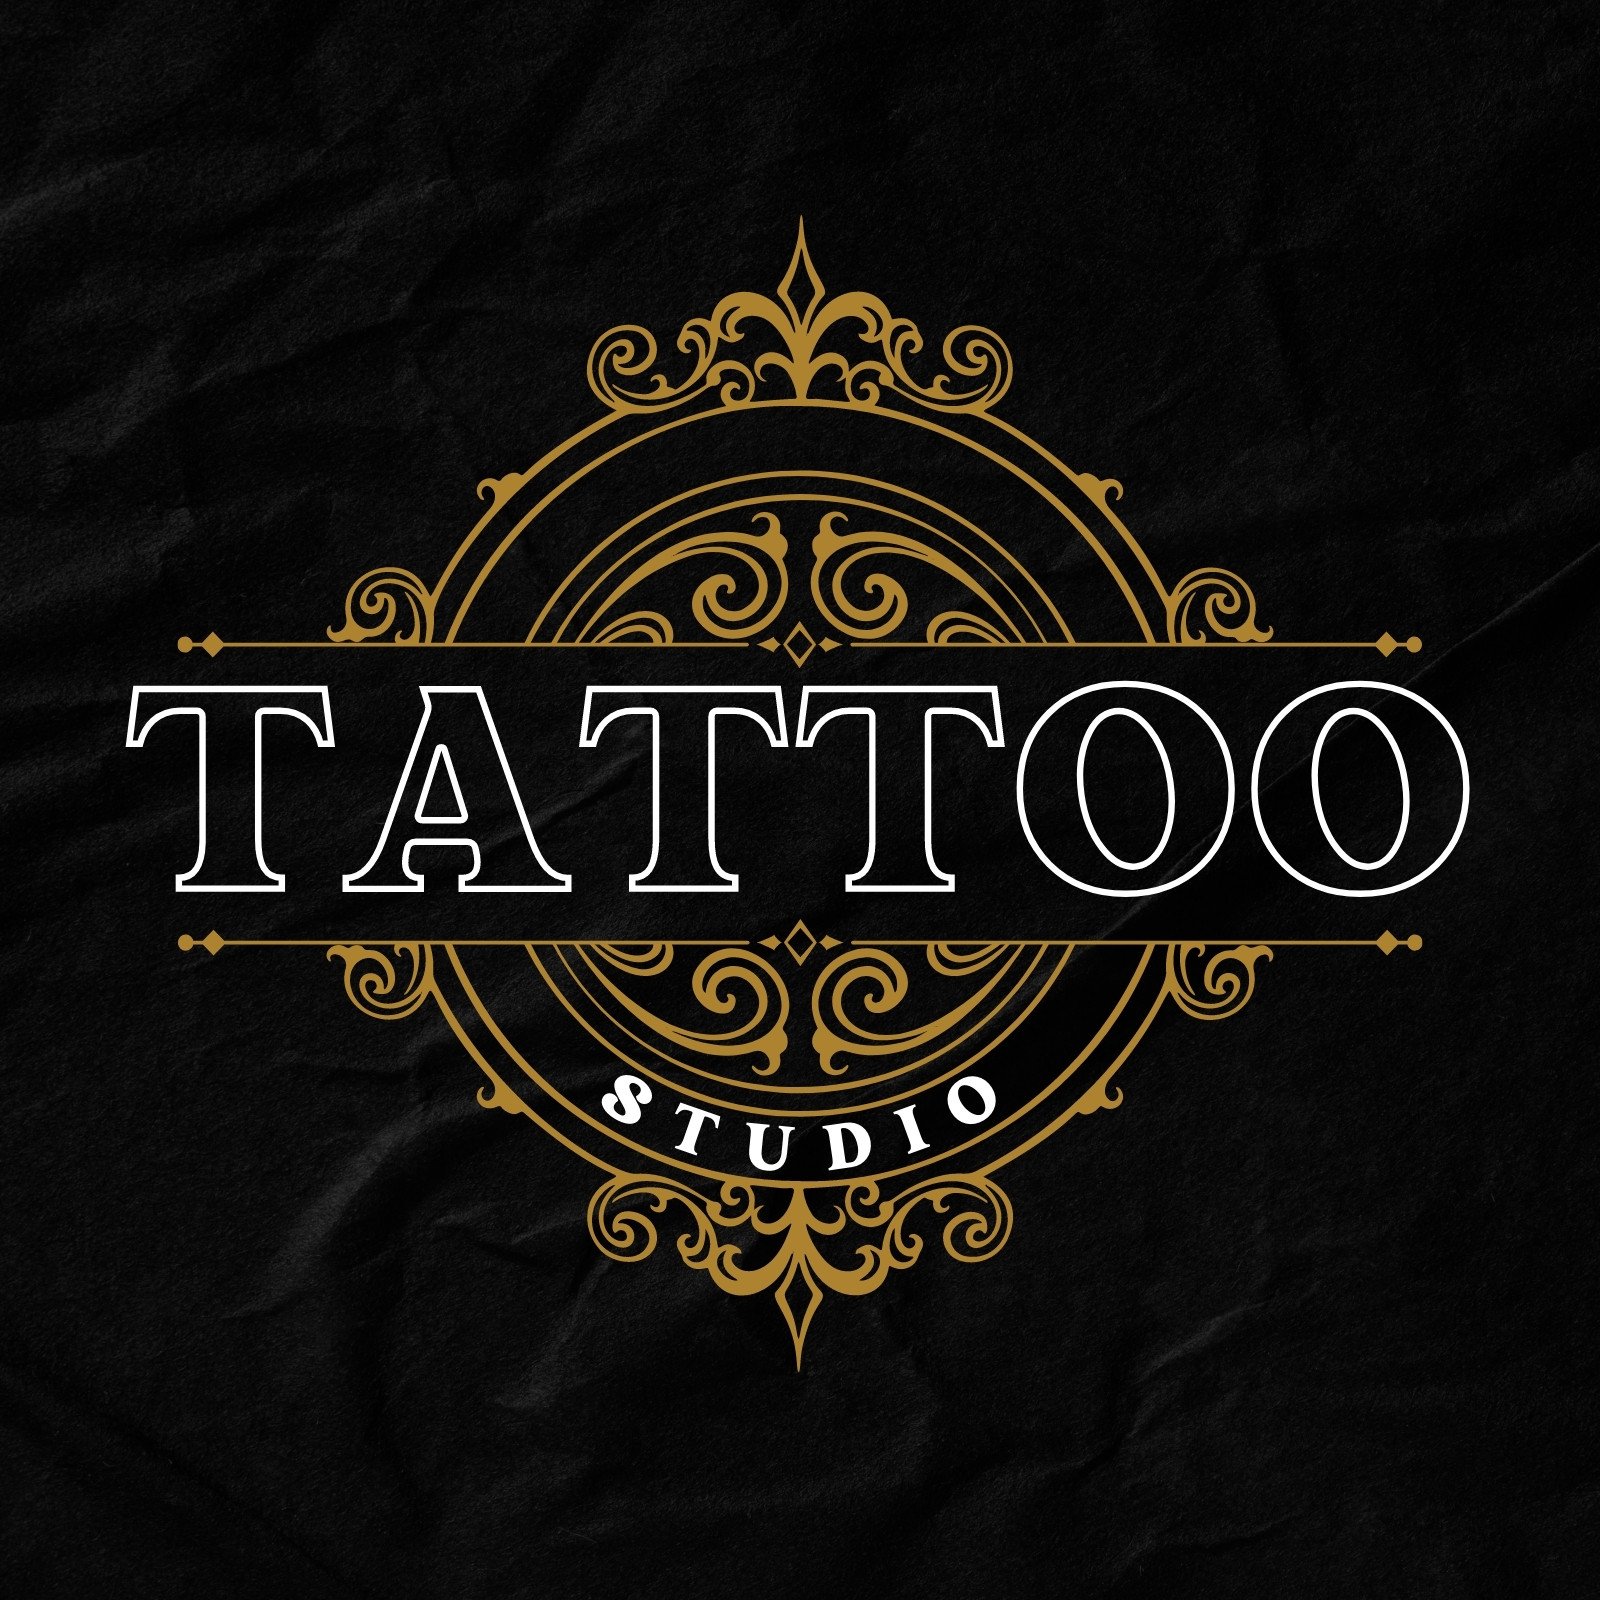 Grade A Tattoos | Tattoo Shops Fort Wayne IN - Grade A Tattoos - Fort Wayne  Indiana